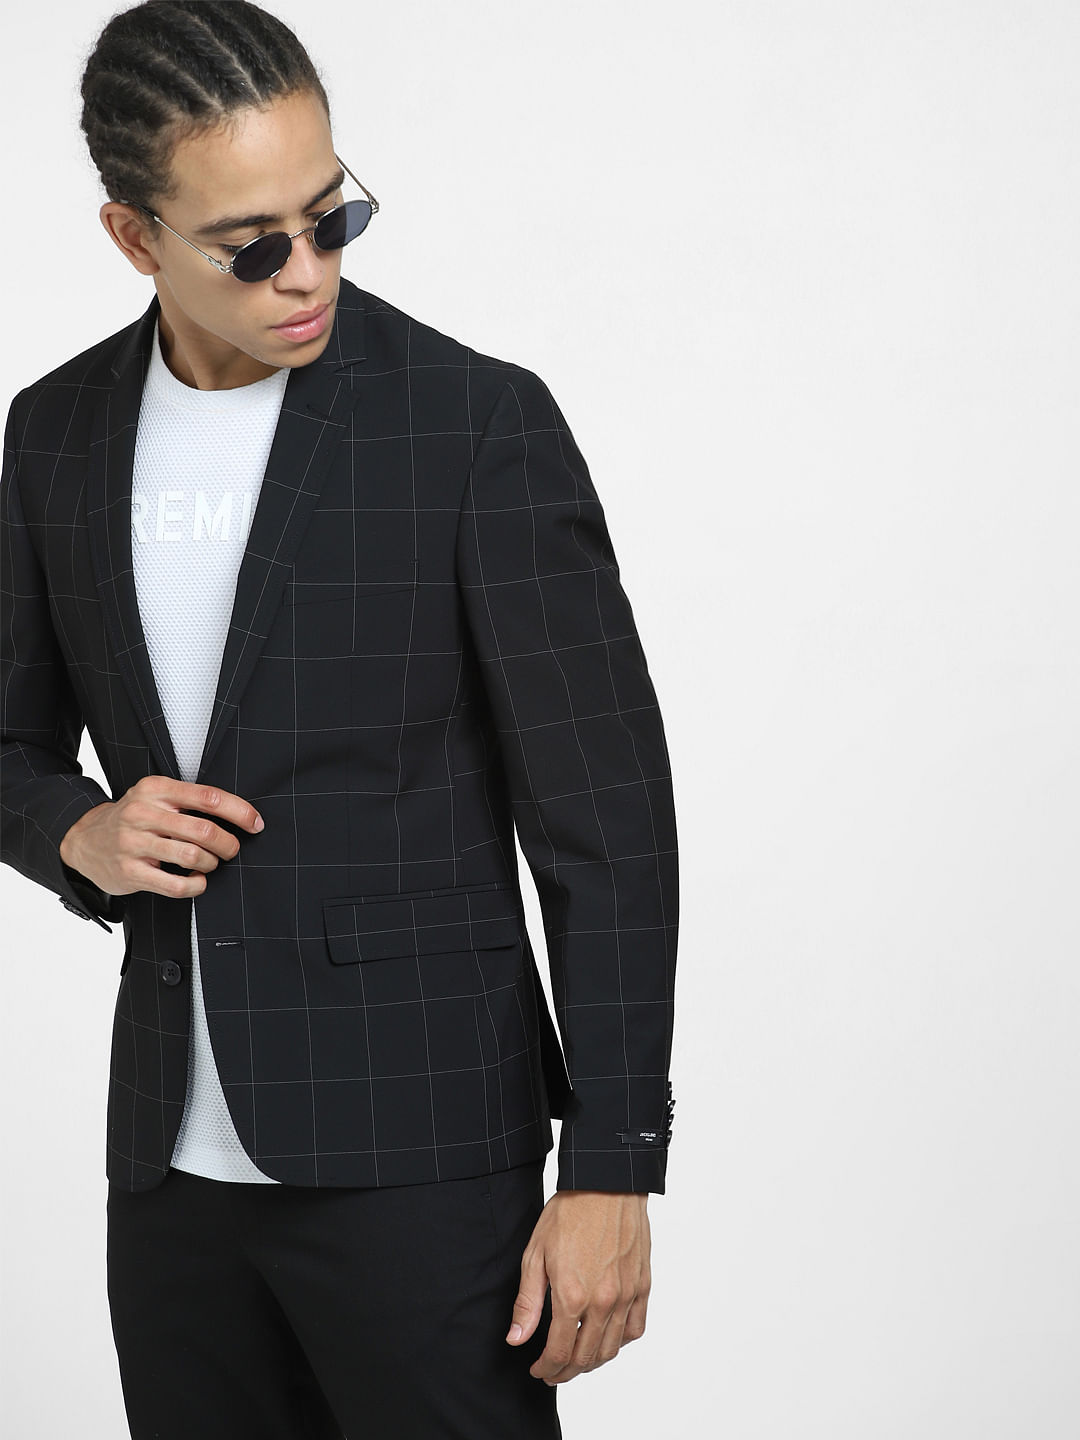 How to style a black blazer with khaki pants - Quora